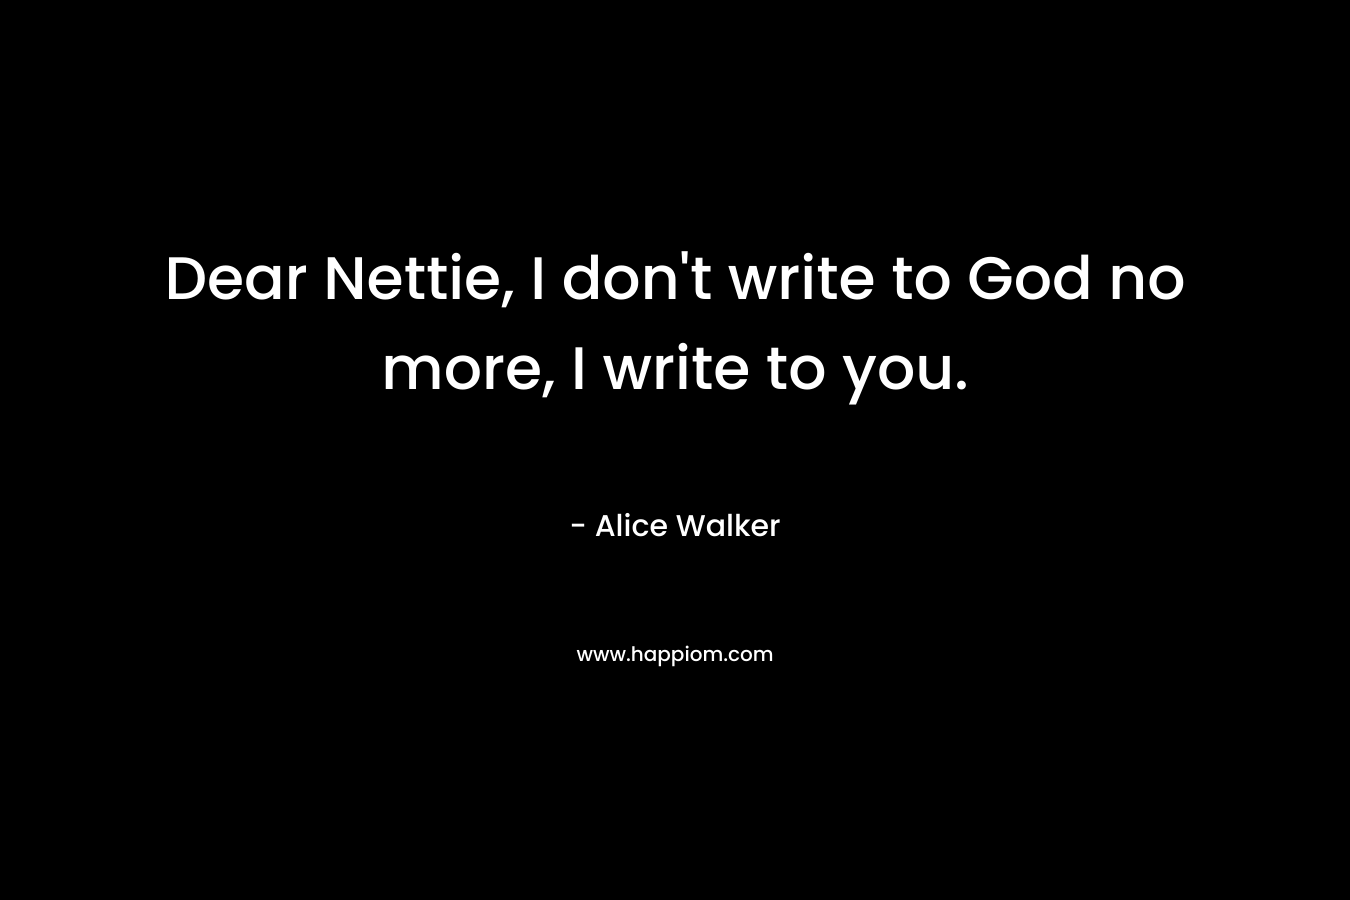 Dear Nettie, I don't write to God no more, I write to you.